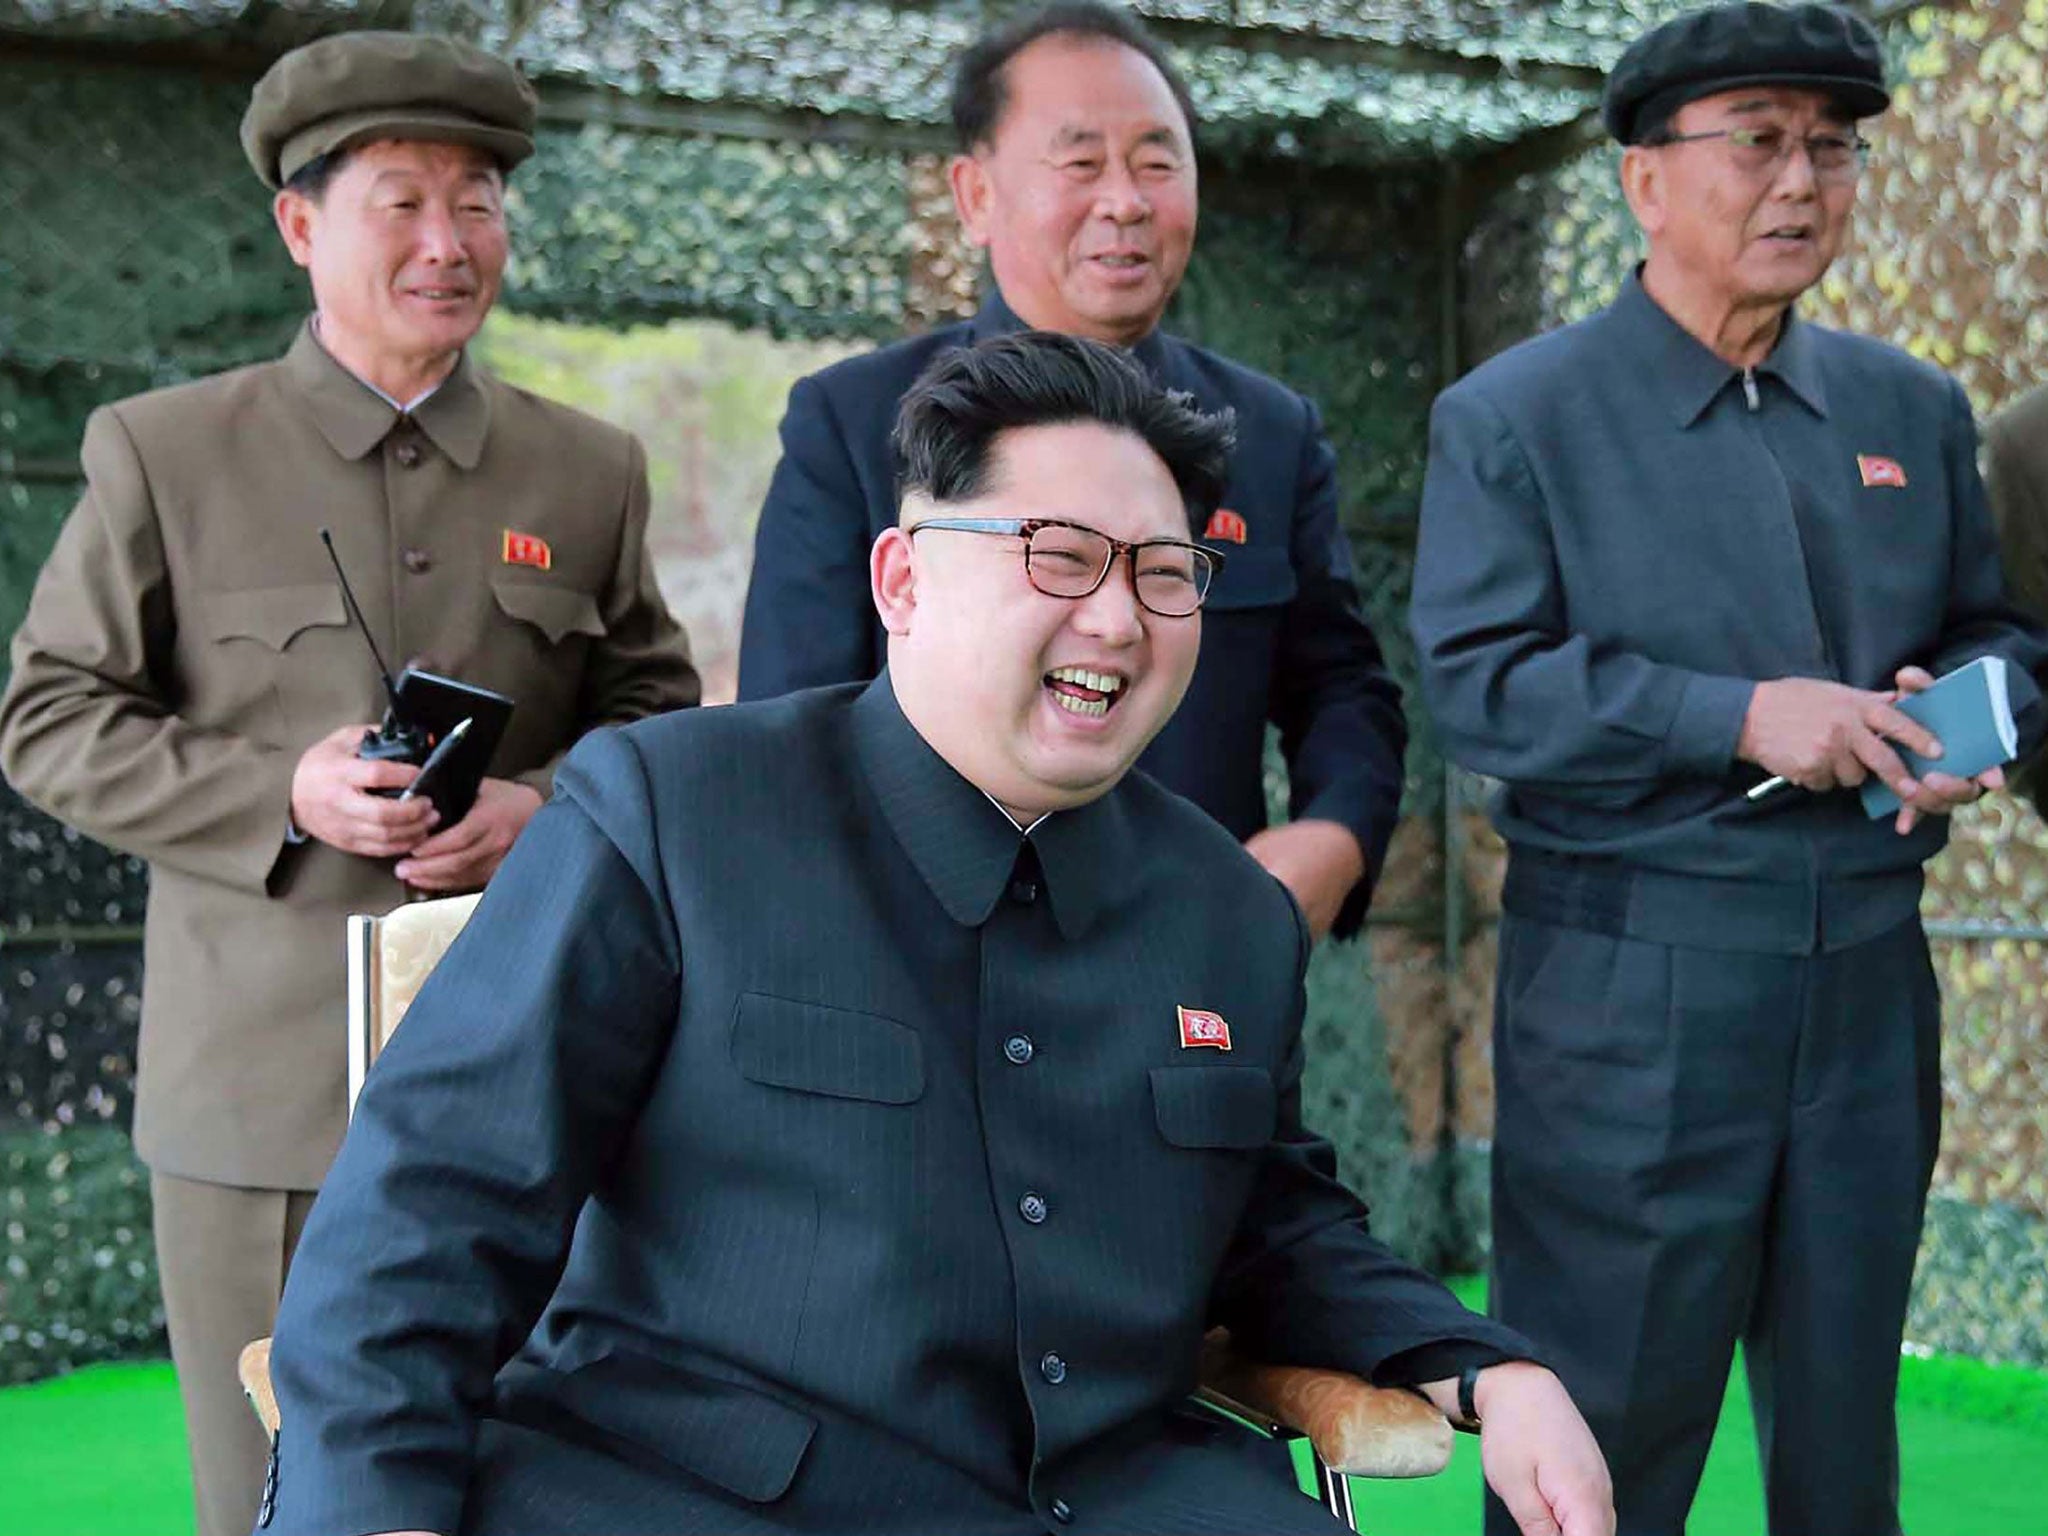 Kim Jong-Un is North Korea's supreme leader